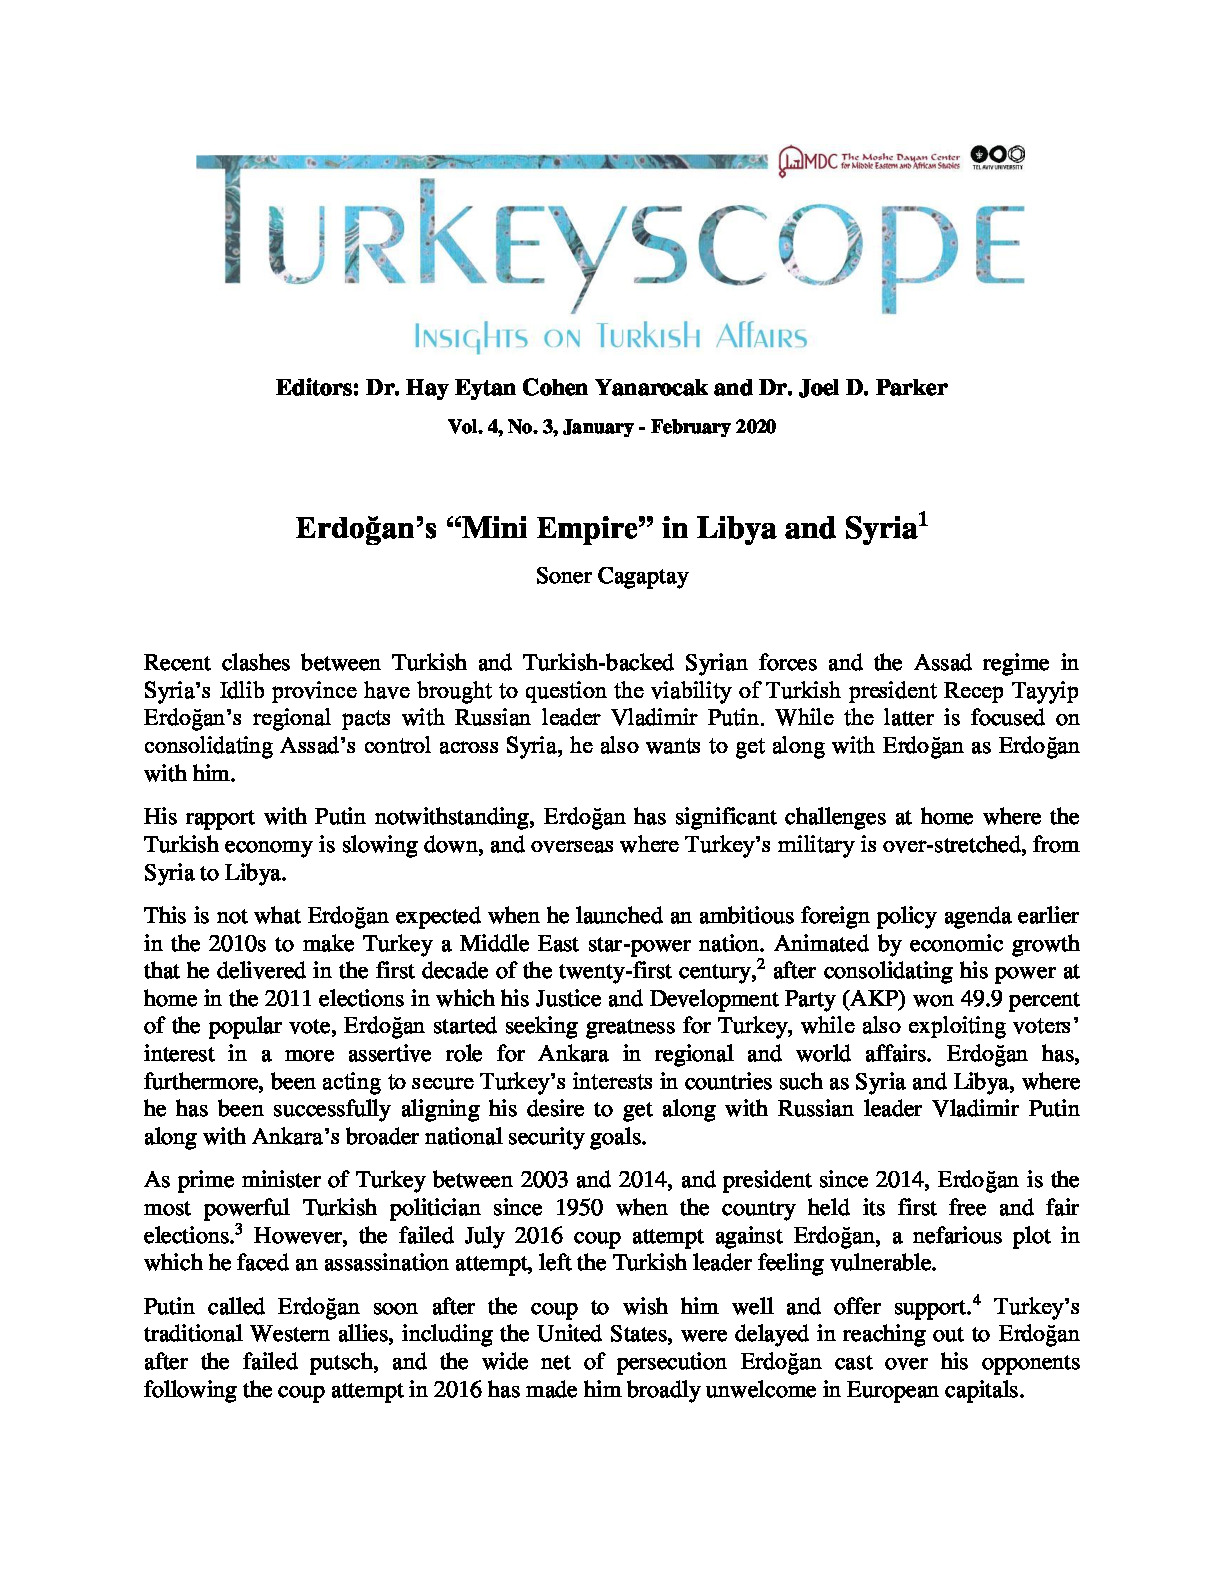 Cagaptay20200212-Turkeyscope.pdf